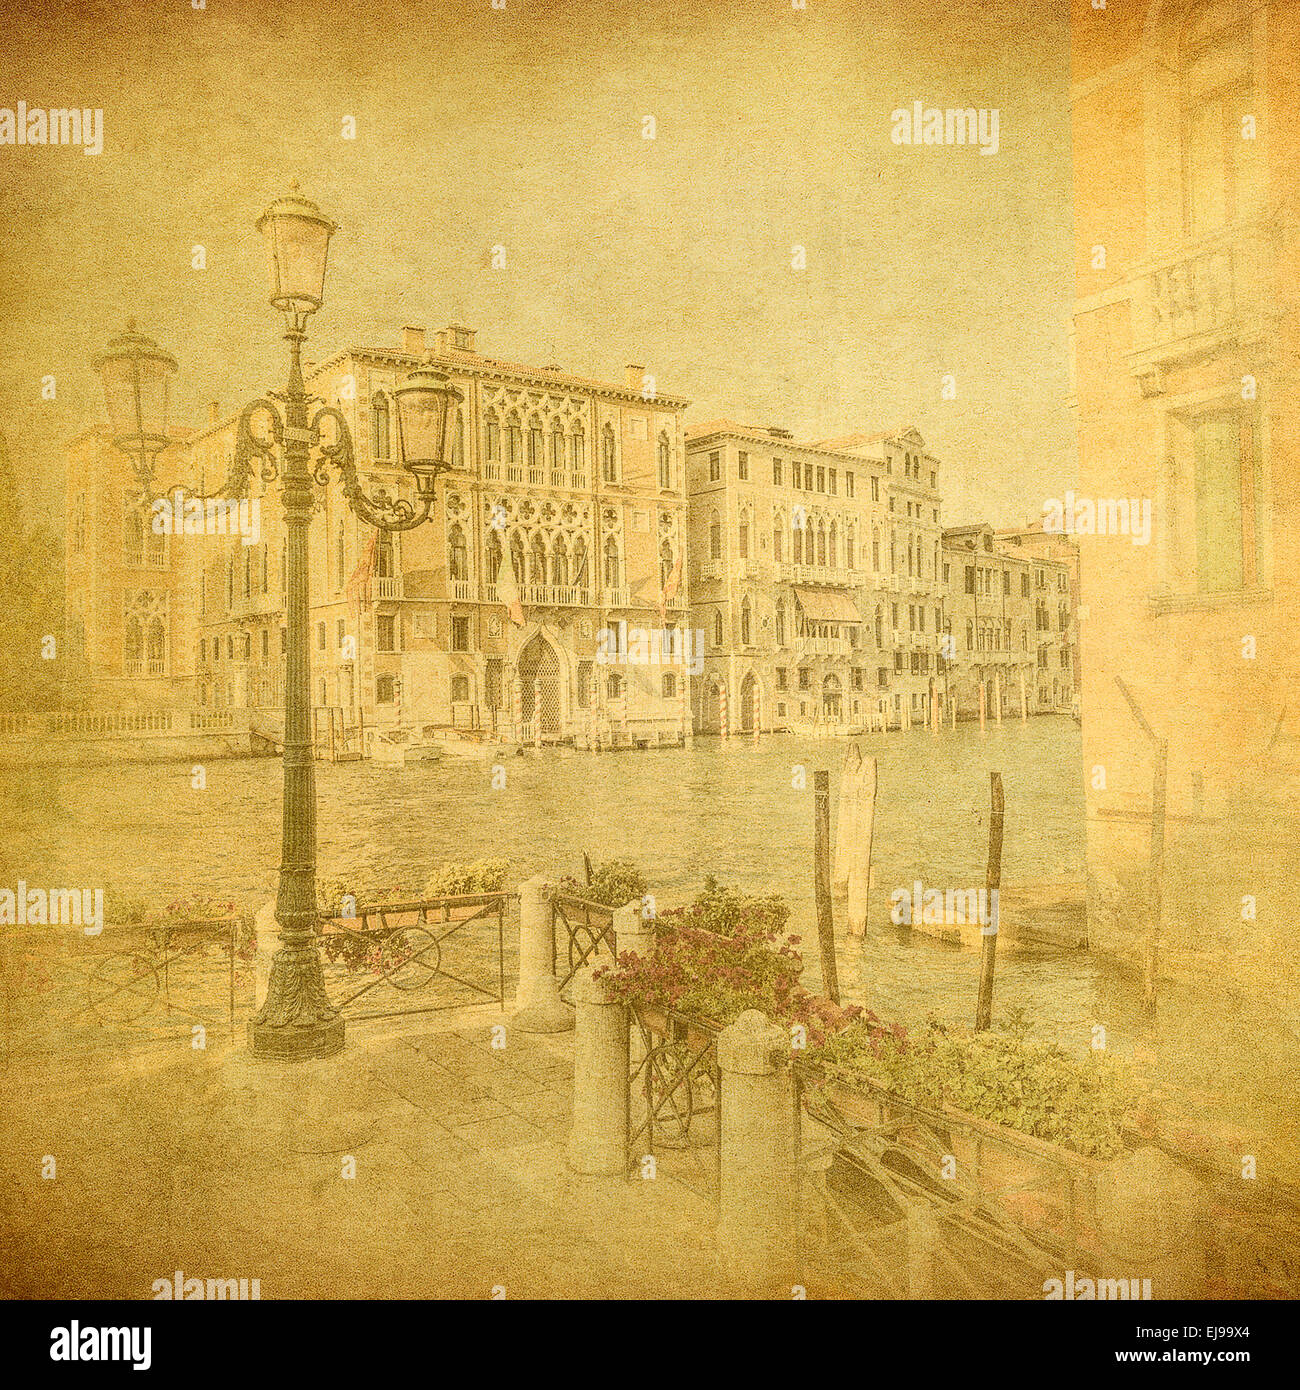 Vintage image of Venice, Italy Stock Photo